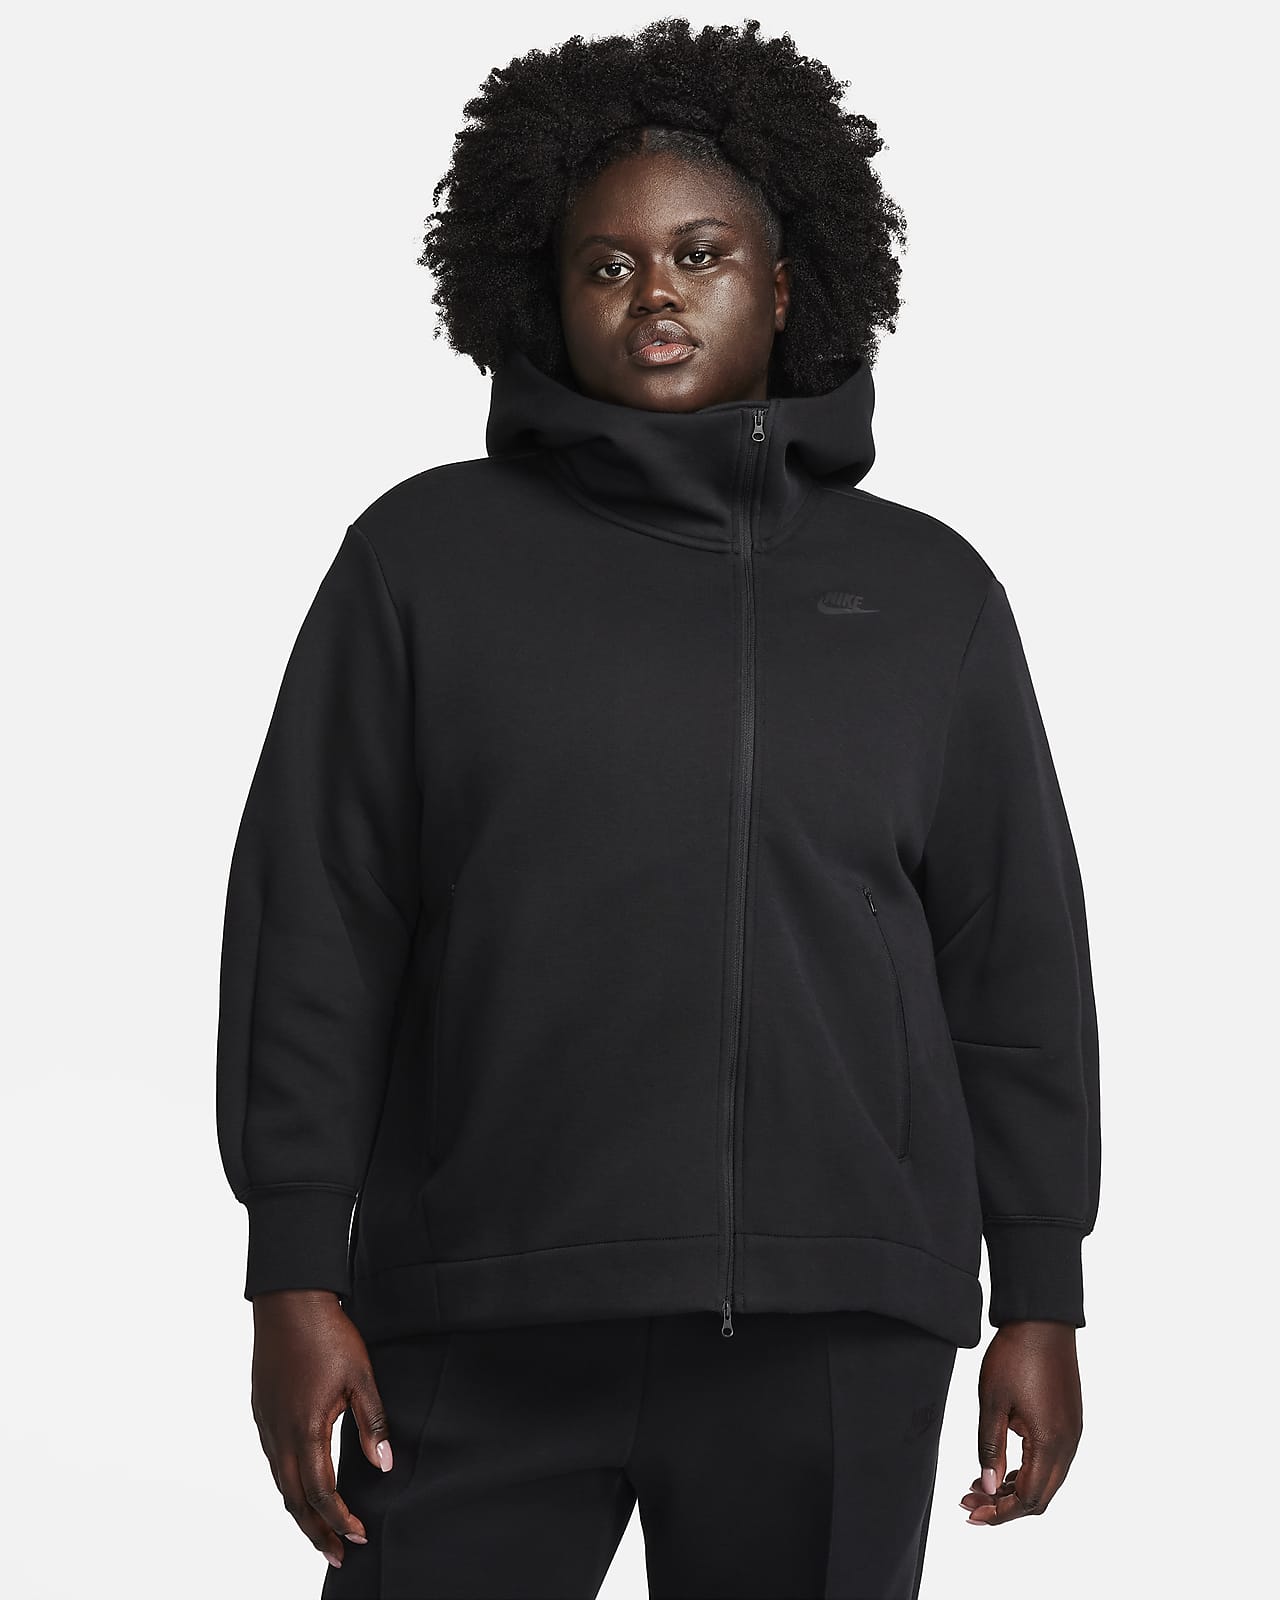 Sudadera con gorro oversized de cierre completo para mujer Nike Sportswear Tech Fleece (talla grande)